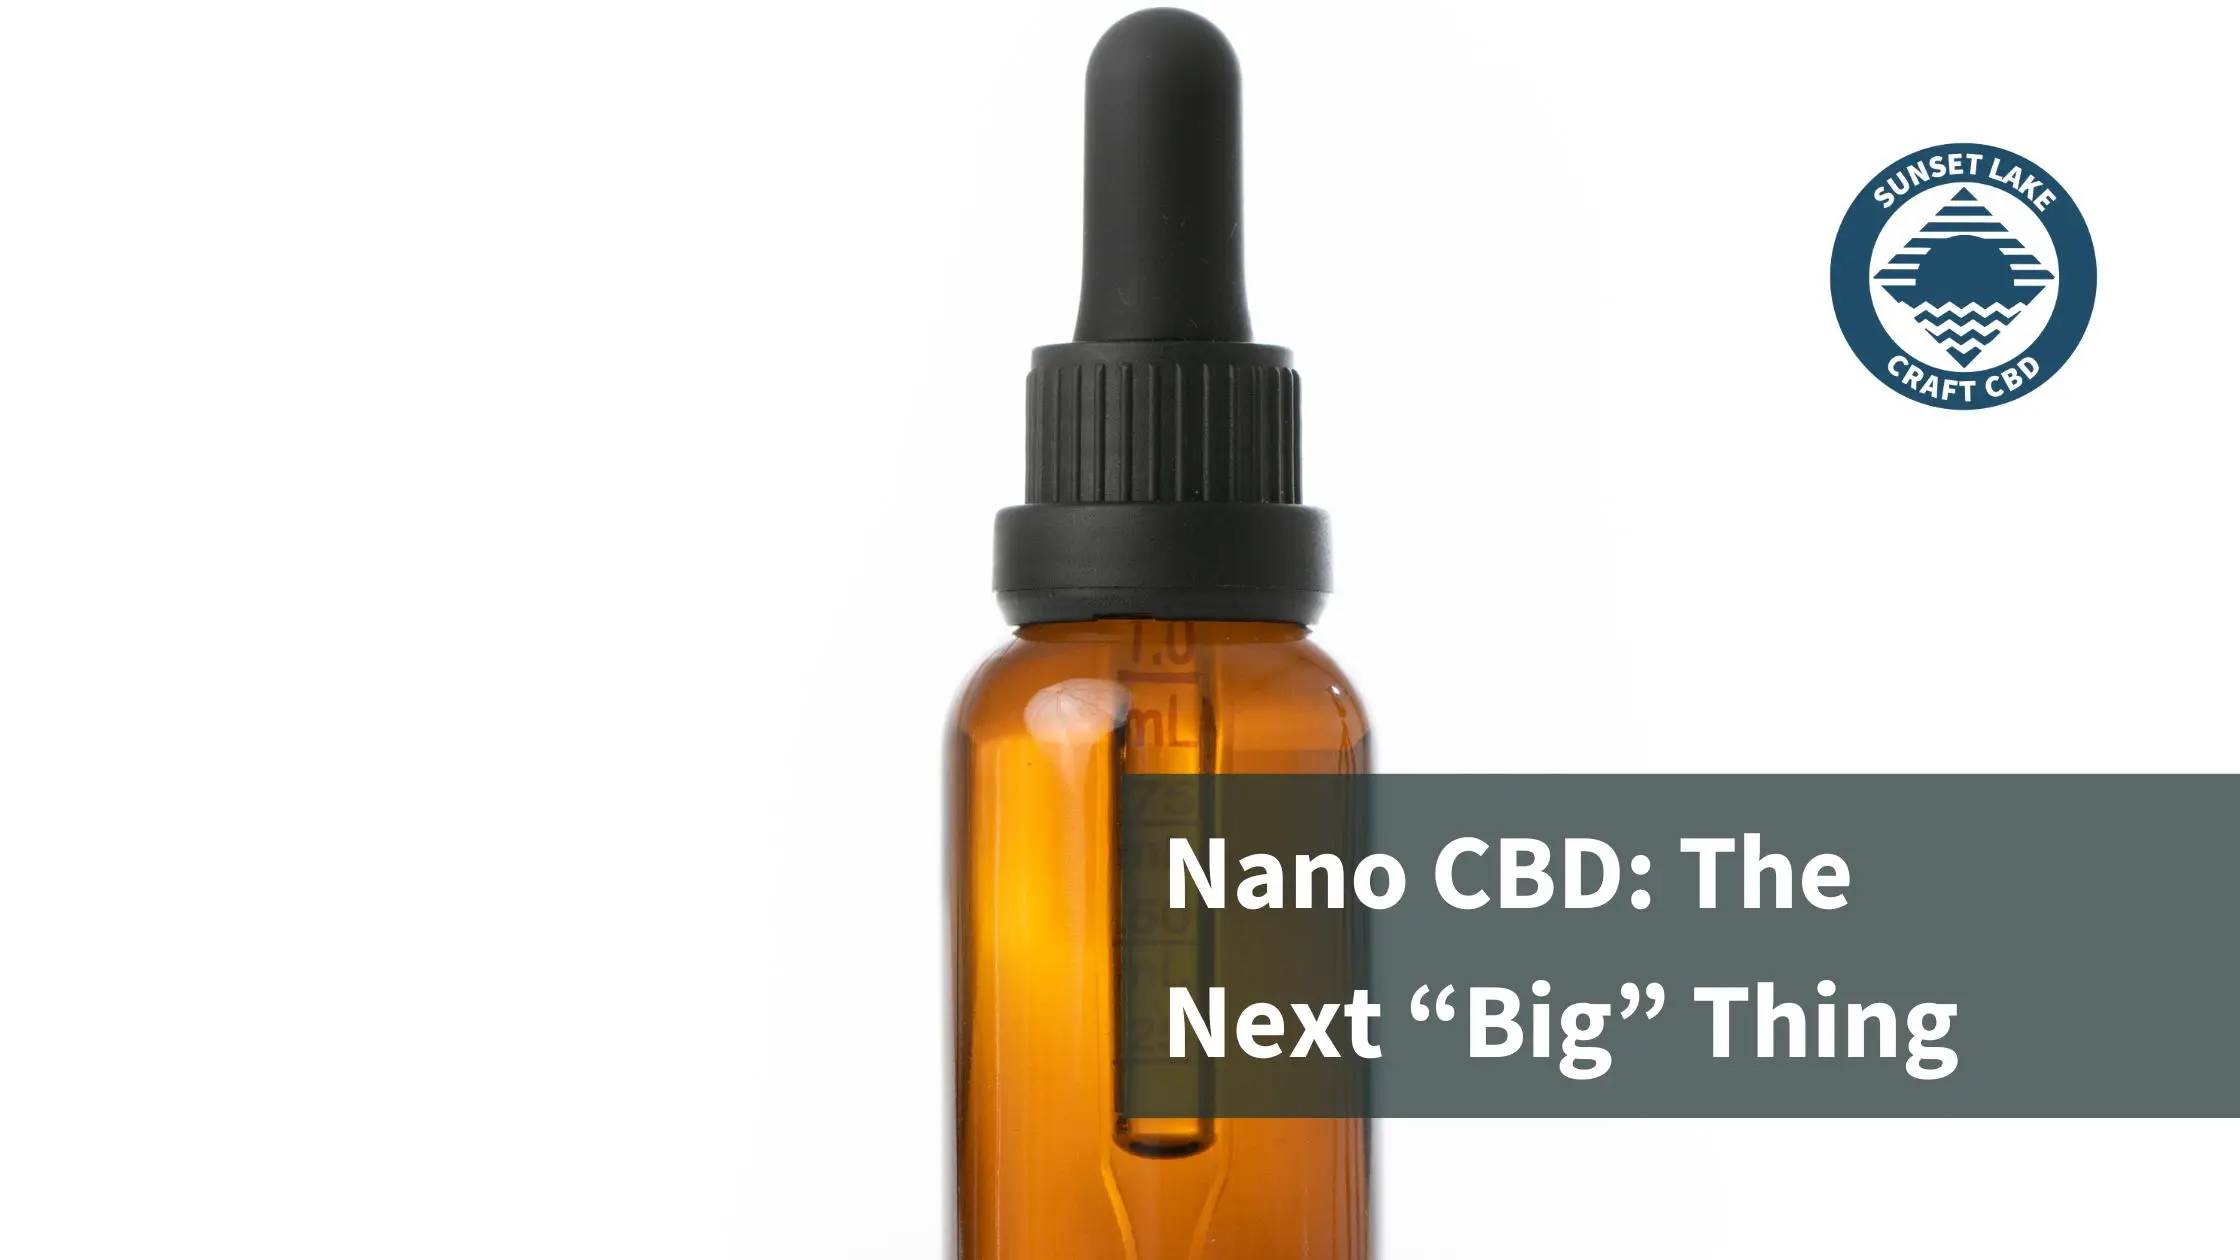 A bottle of CBD oil. Text reads "Nano CBD: The Next 'Big' Thing"